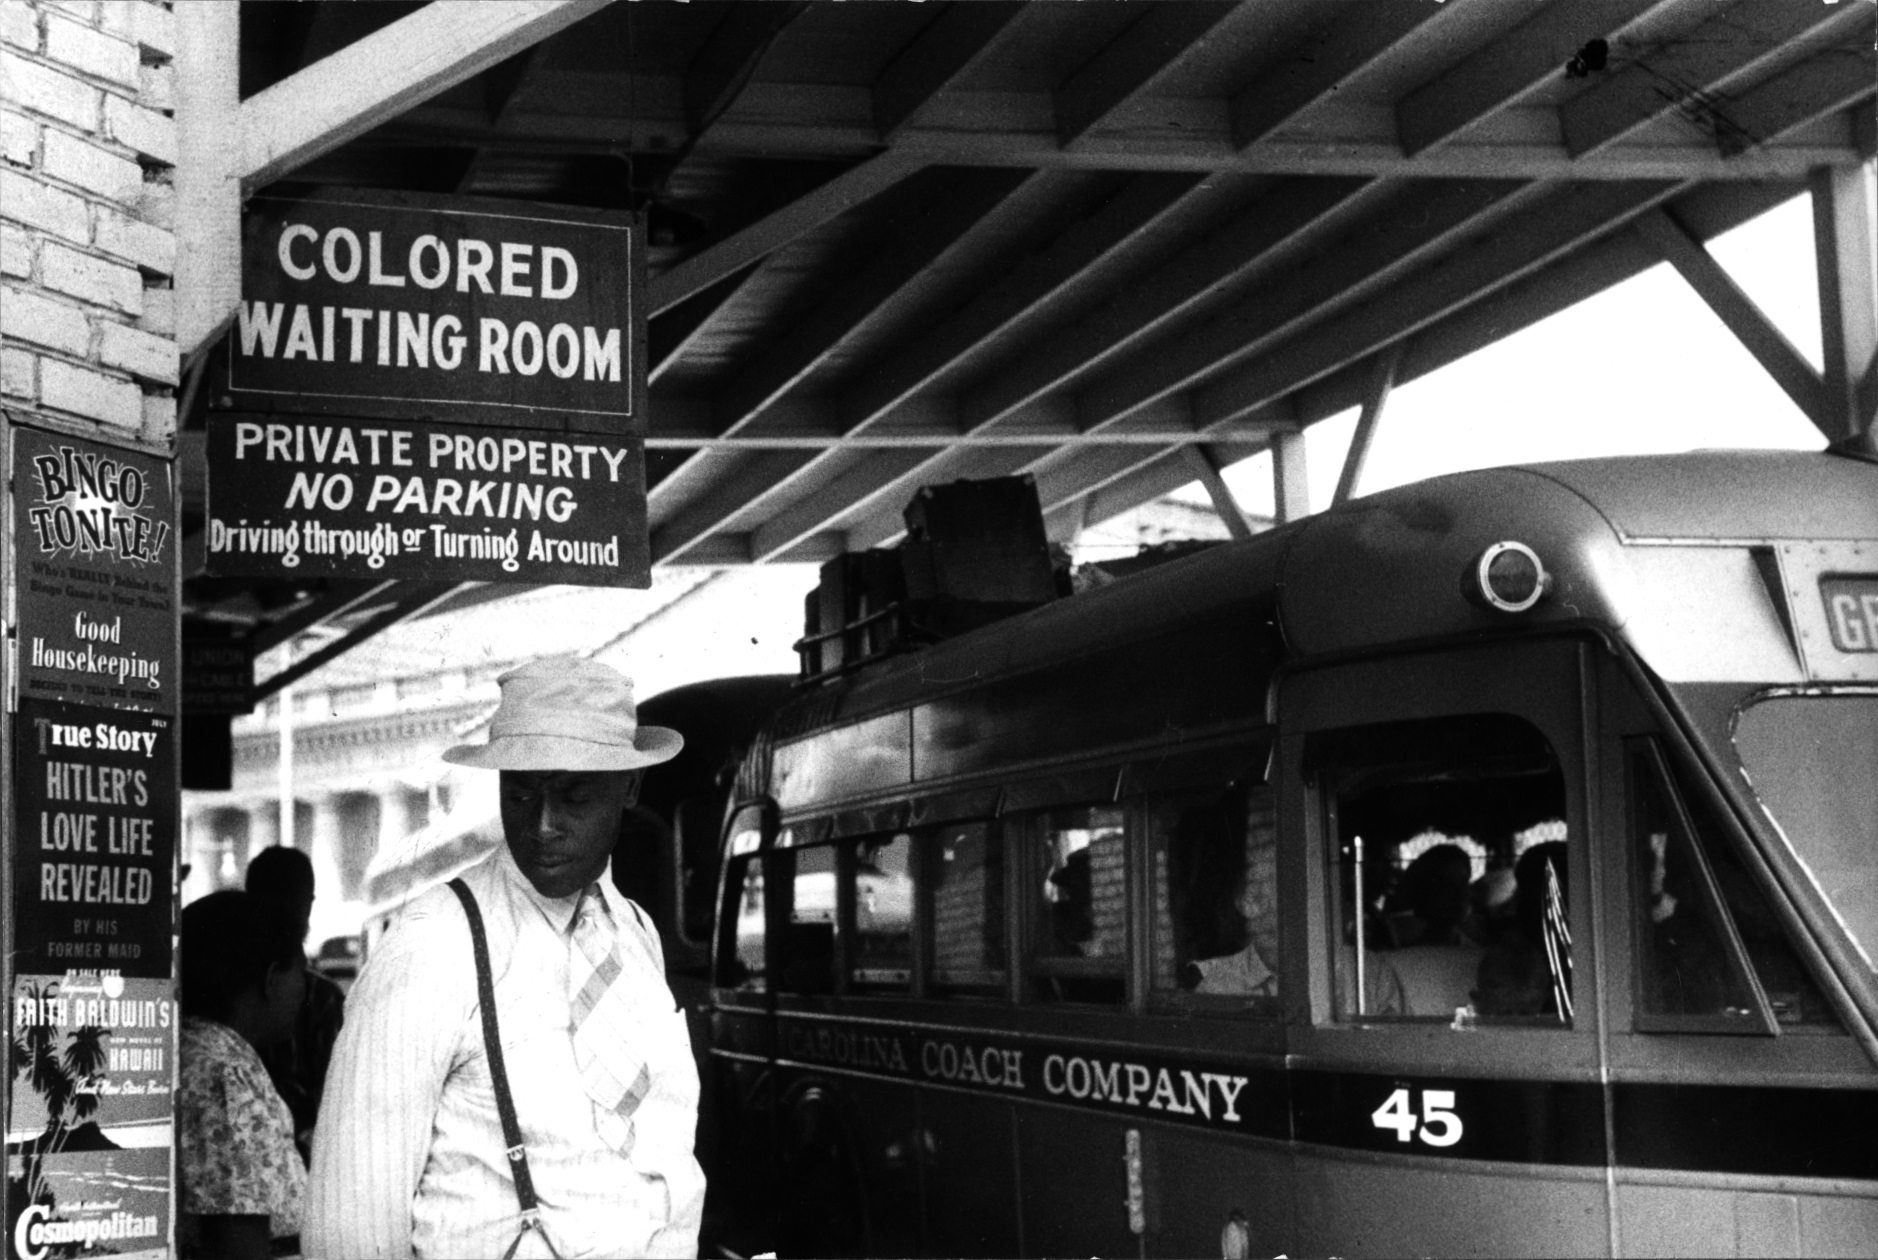 Return to Jim Crow: California state university to introduce segregated housing